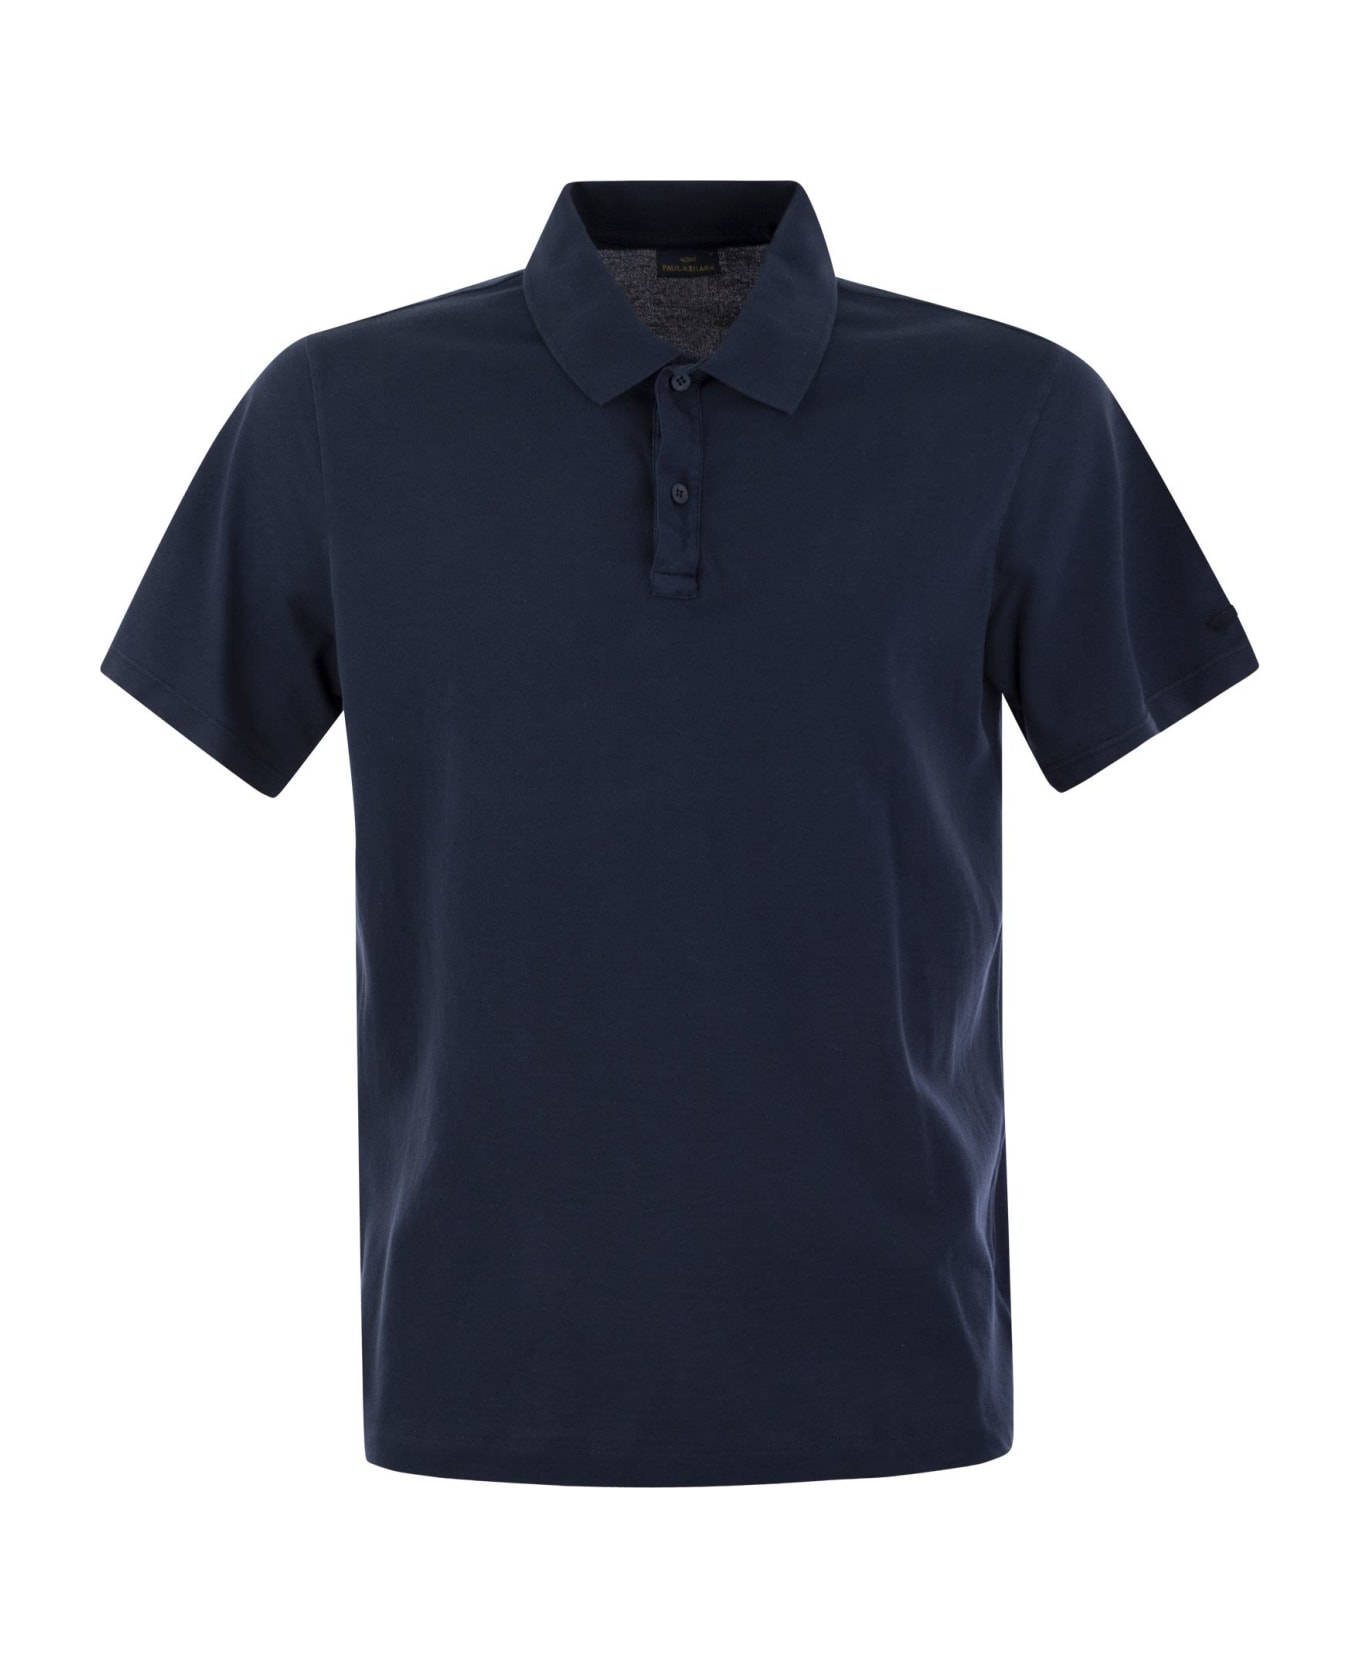 Paul&Shark Garment-dyed Pique Cotton Polo Shirt